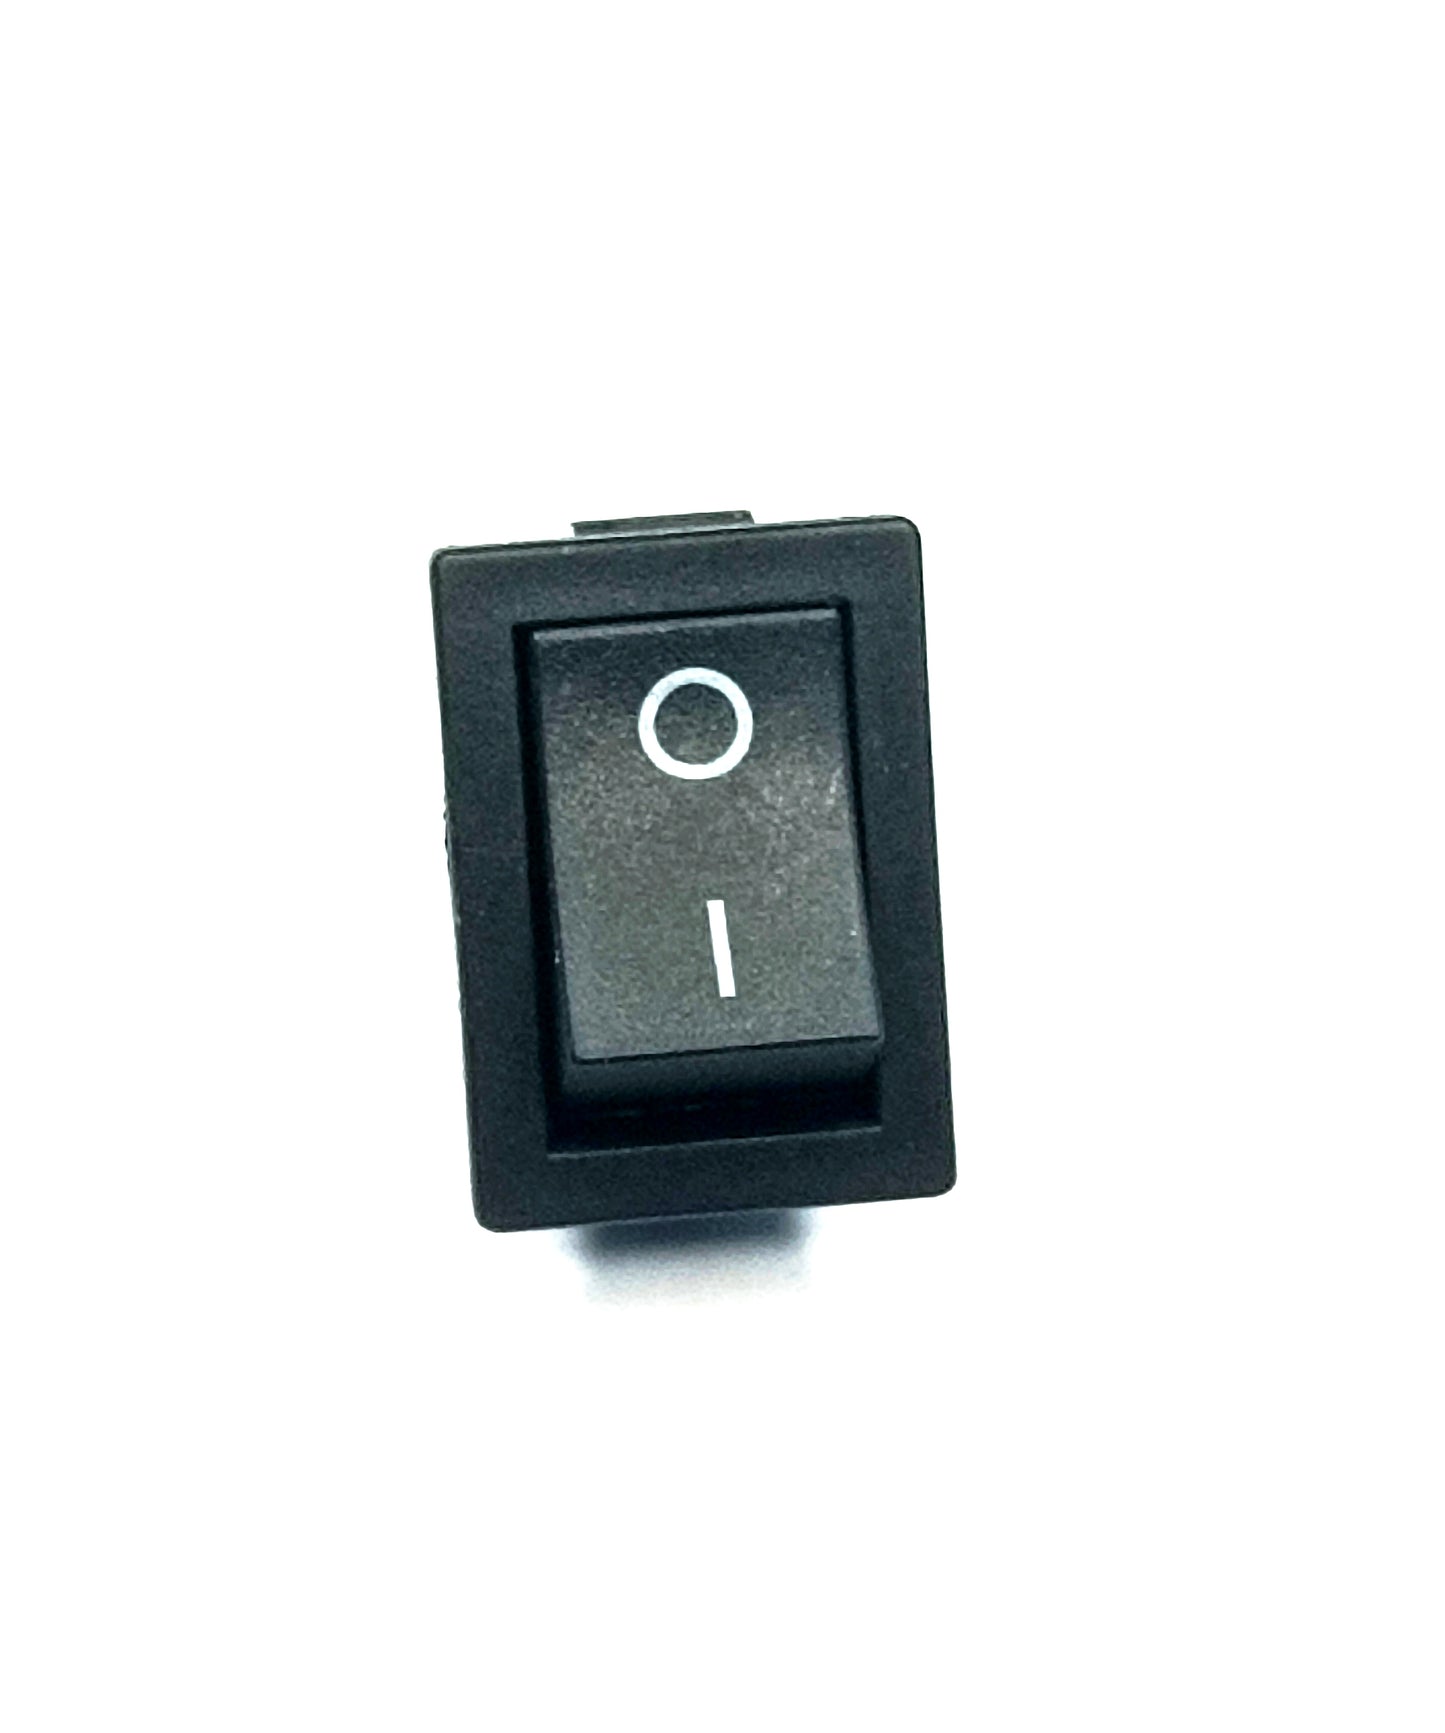 2 Pin SPST Rocker Switch